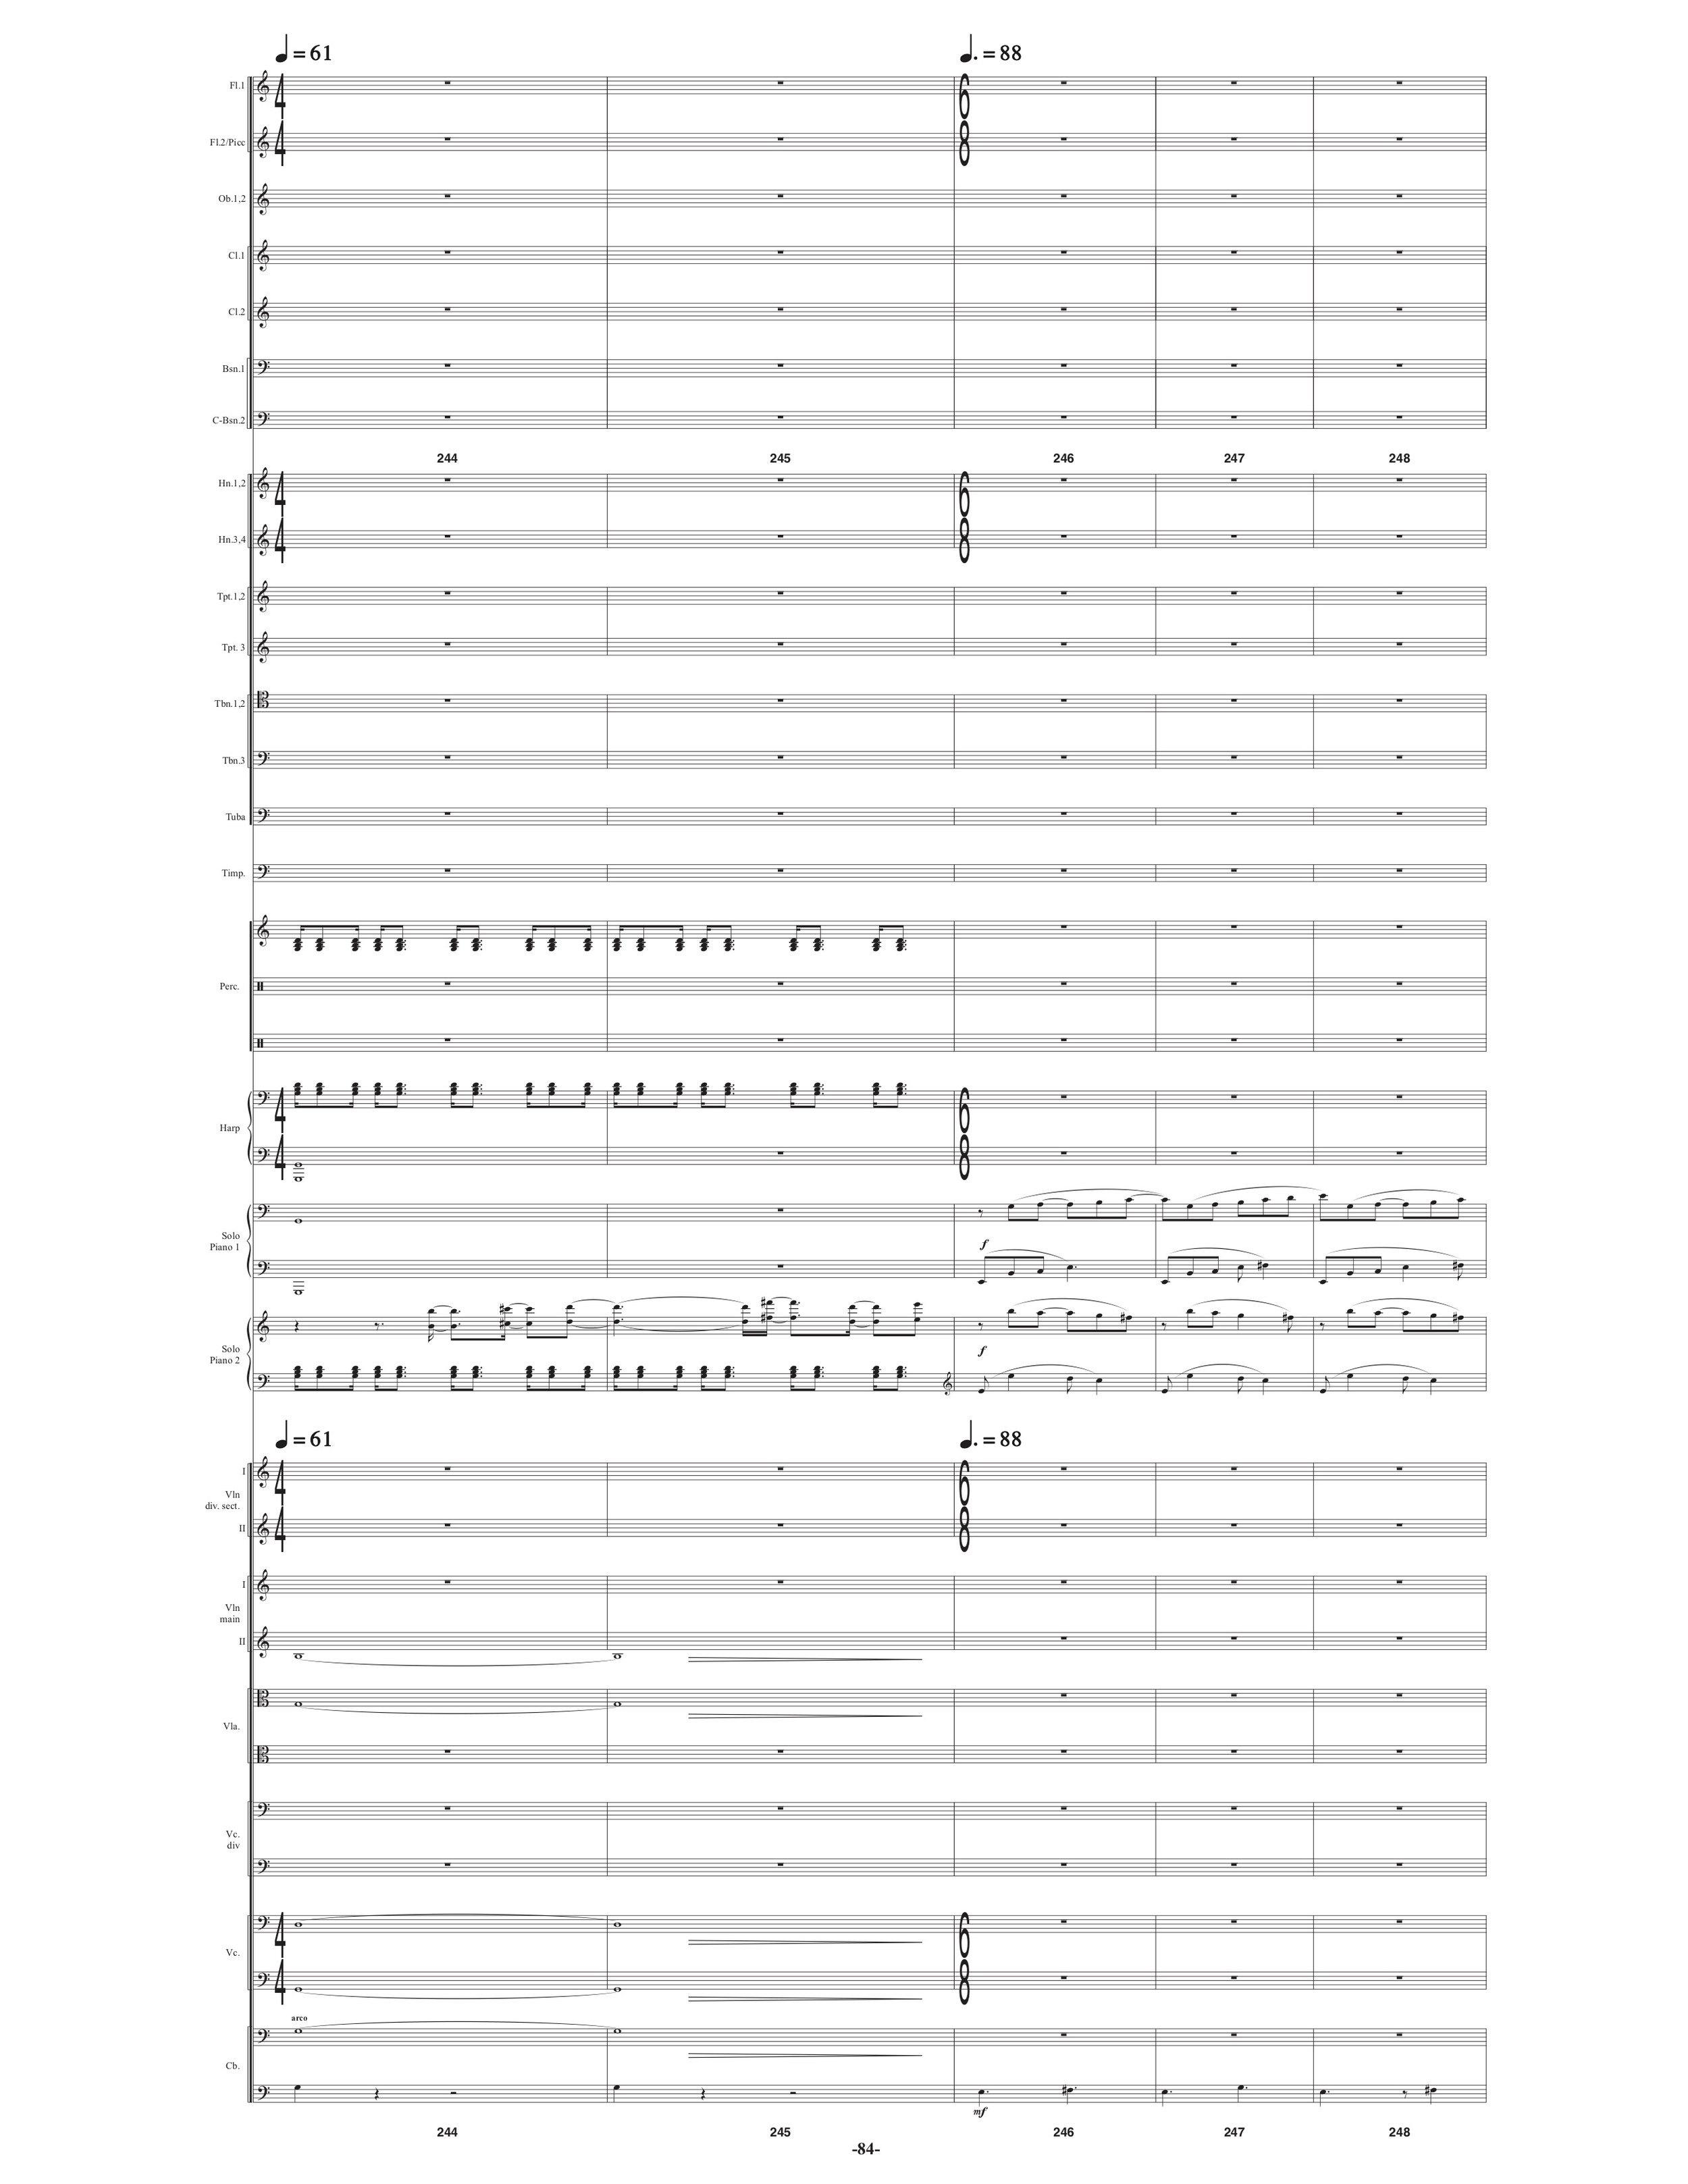 Symphony_Orch & 2 Pianos p89.jpg